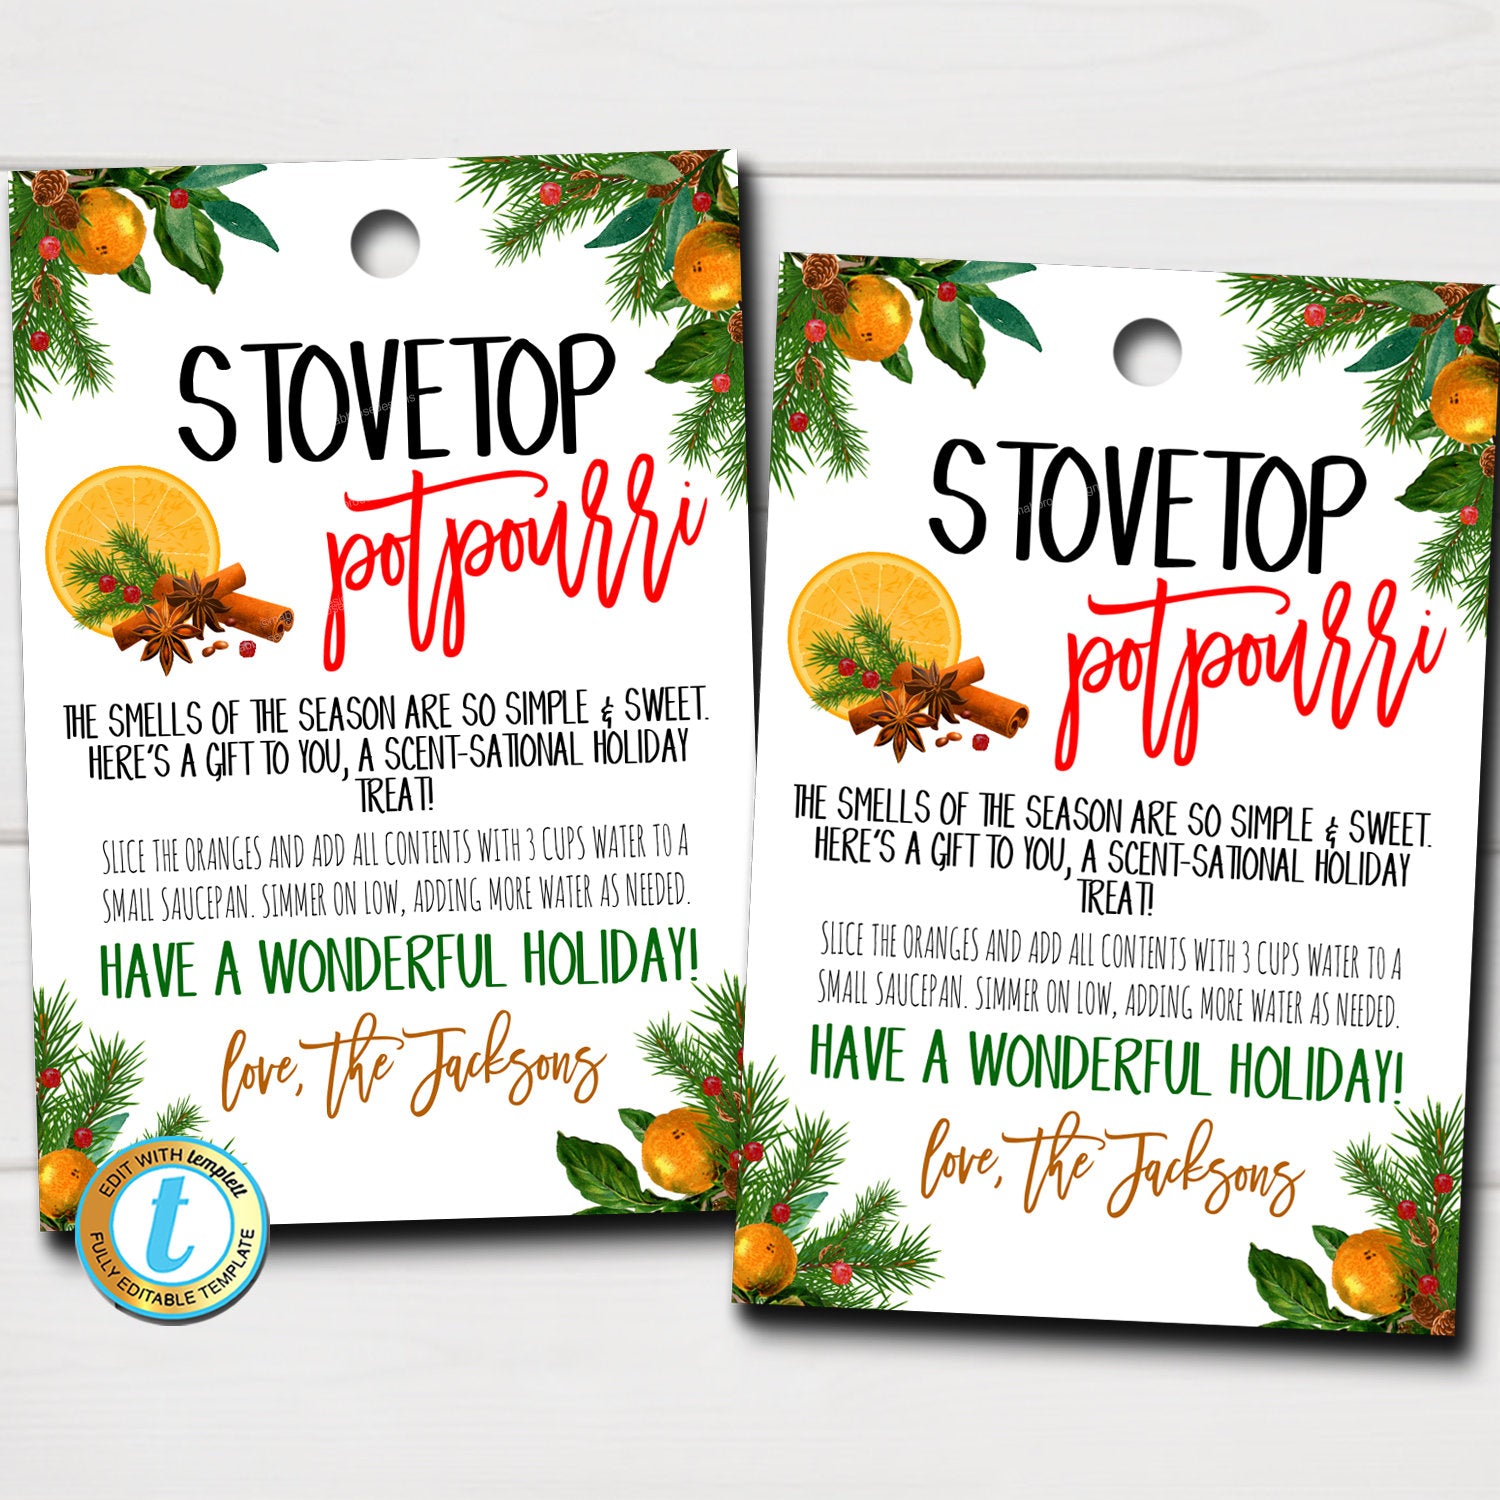 Stovetop Christmas Potpourri (+FREE Printable Tags!)